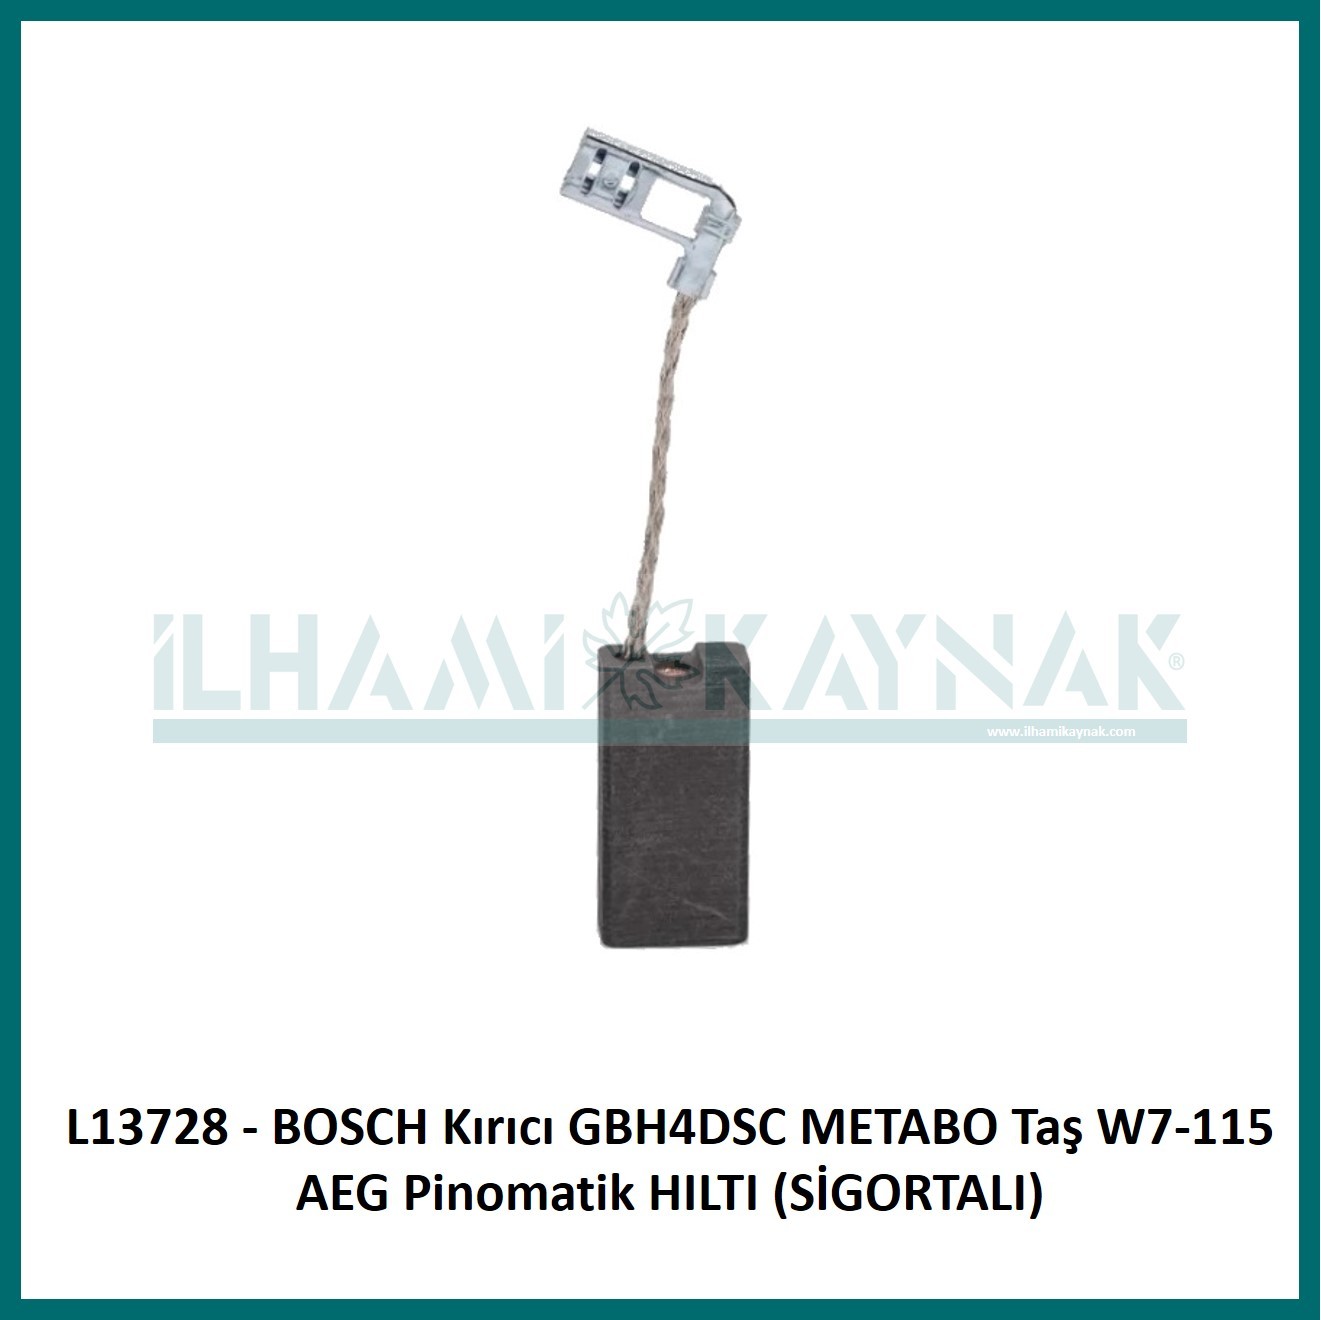 L13728 - BOSCH Kırıcı GBH4DSC METABO Taş W7-115 AEG Pinomatik HILTI (SİGORTALI) - 5*10*17 mm - Minimum Satın Alım: 10 Adet